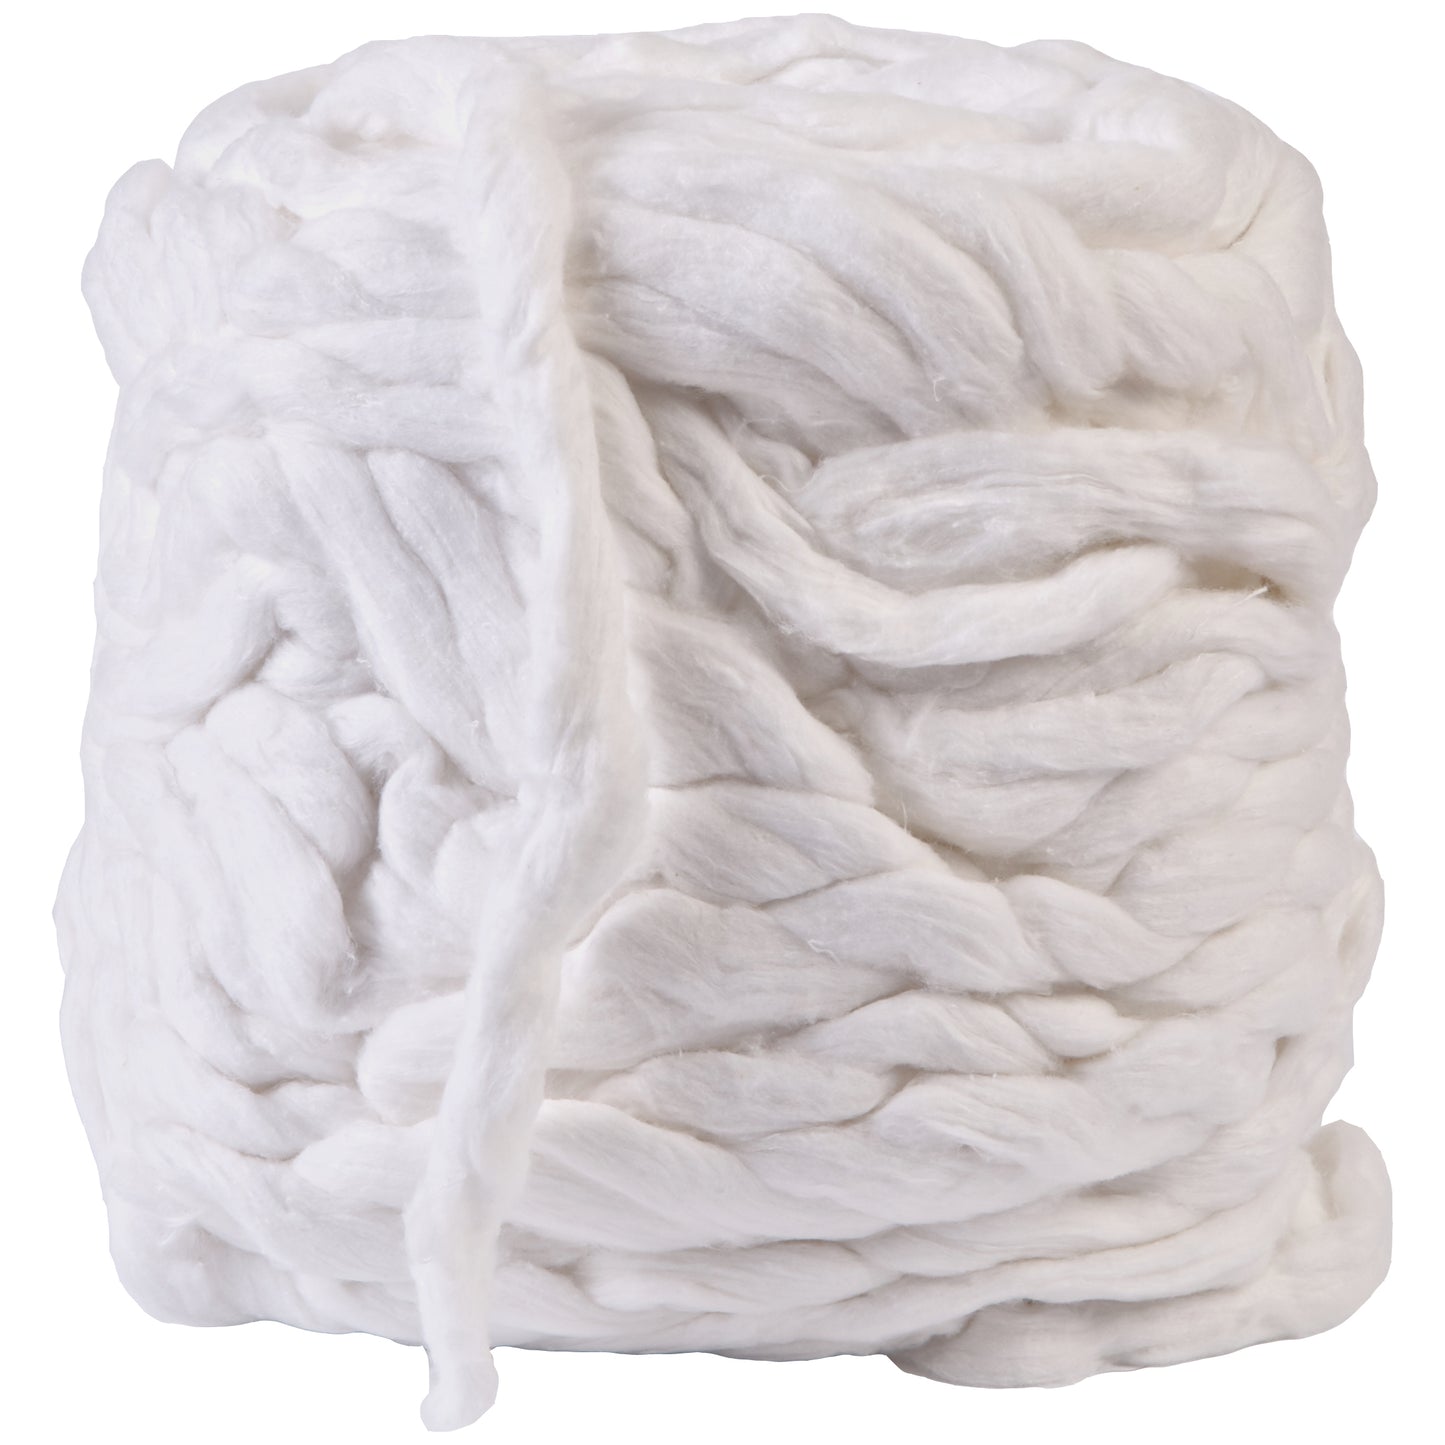 Cotton Neck Wool 2lb - Case of 8